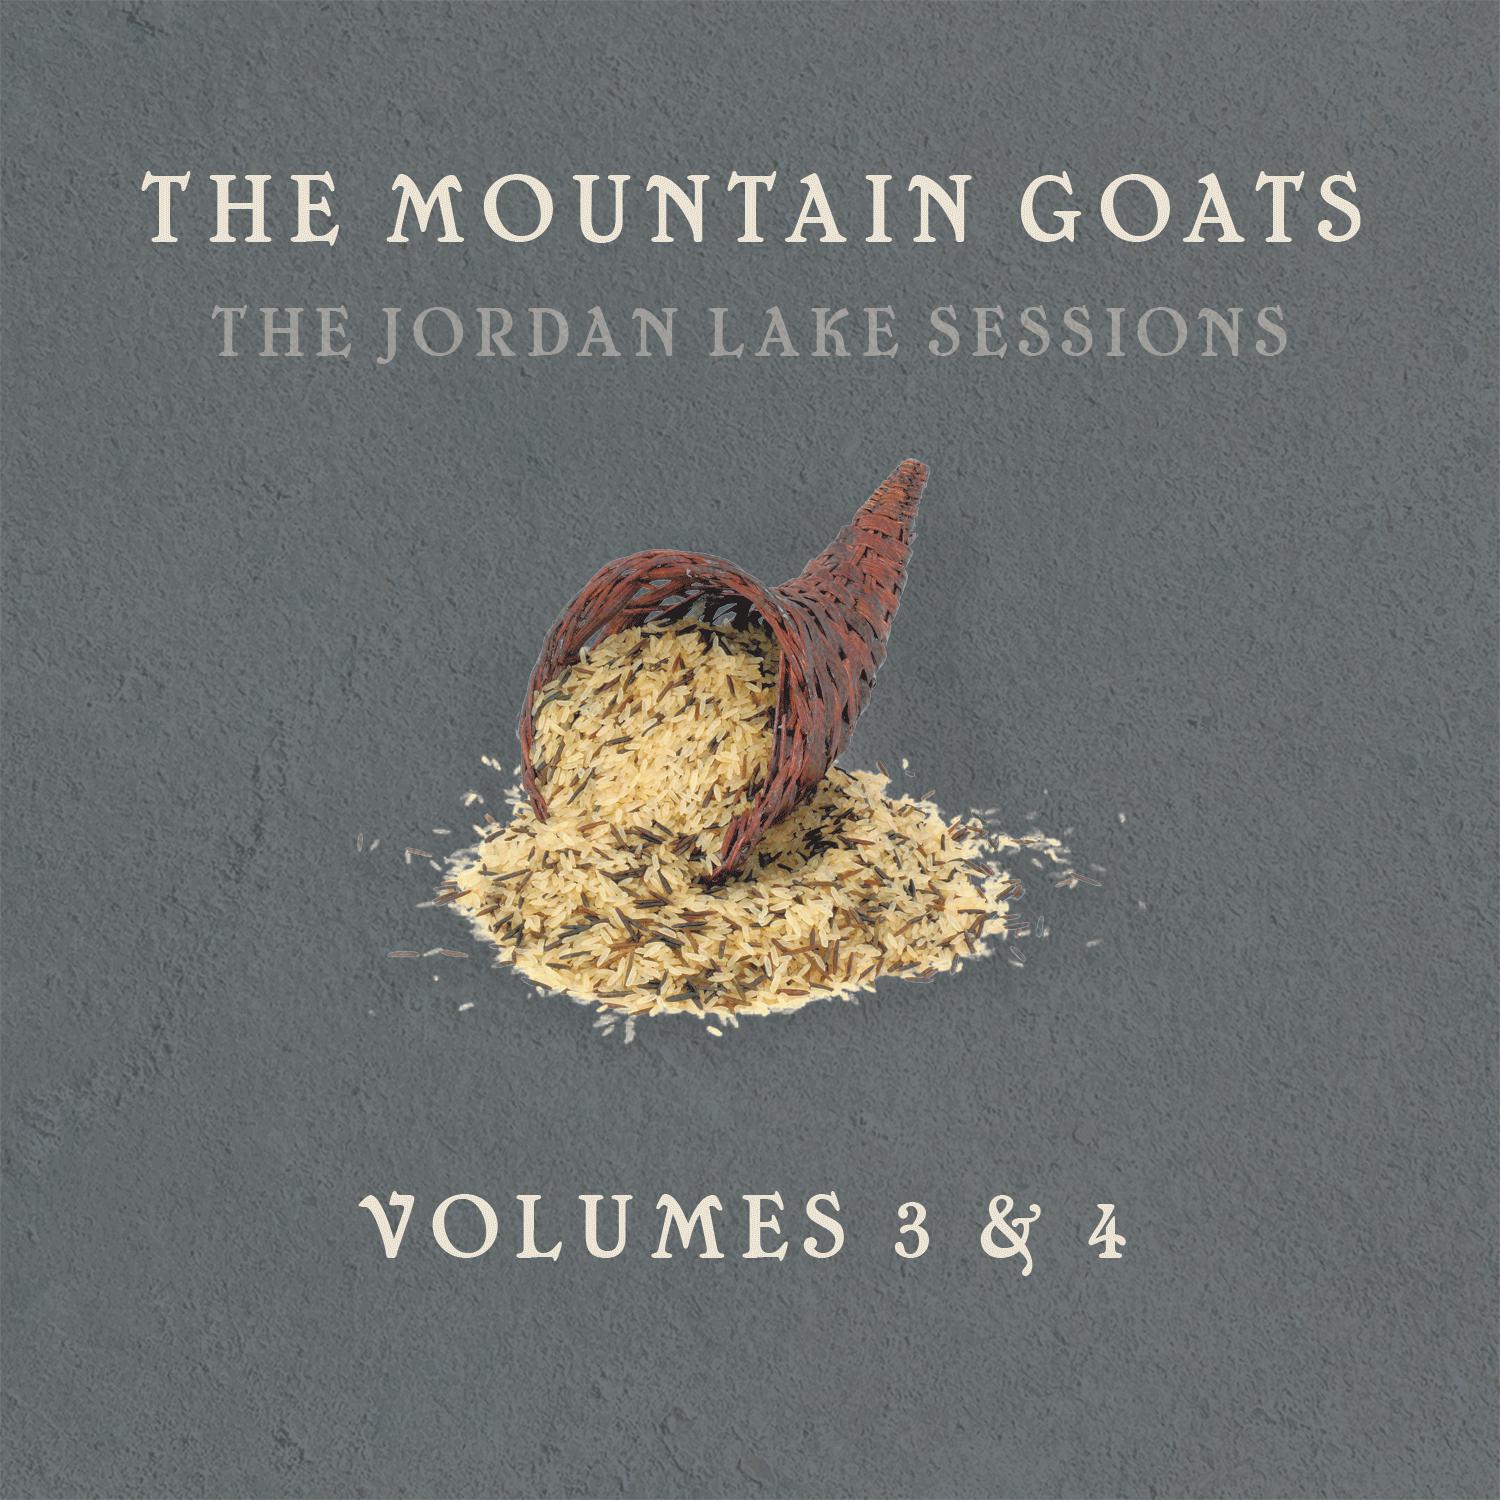 The Mountain Goats - Until Olympius Returns (The Jordan Lake Sessions Volume 4)